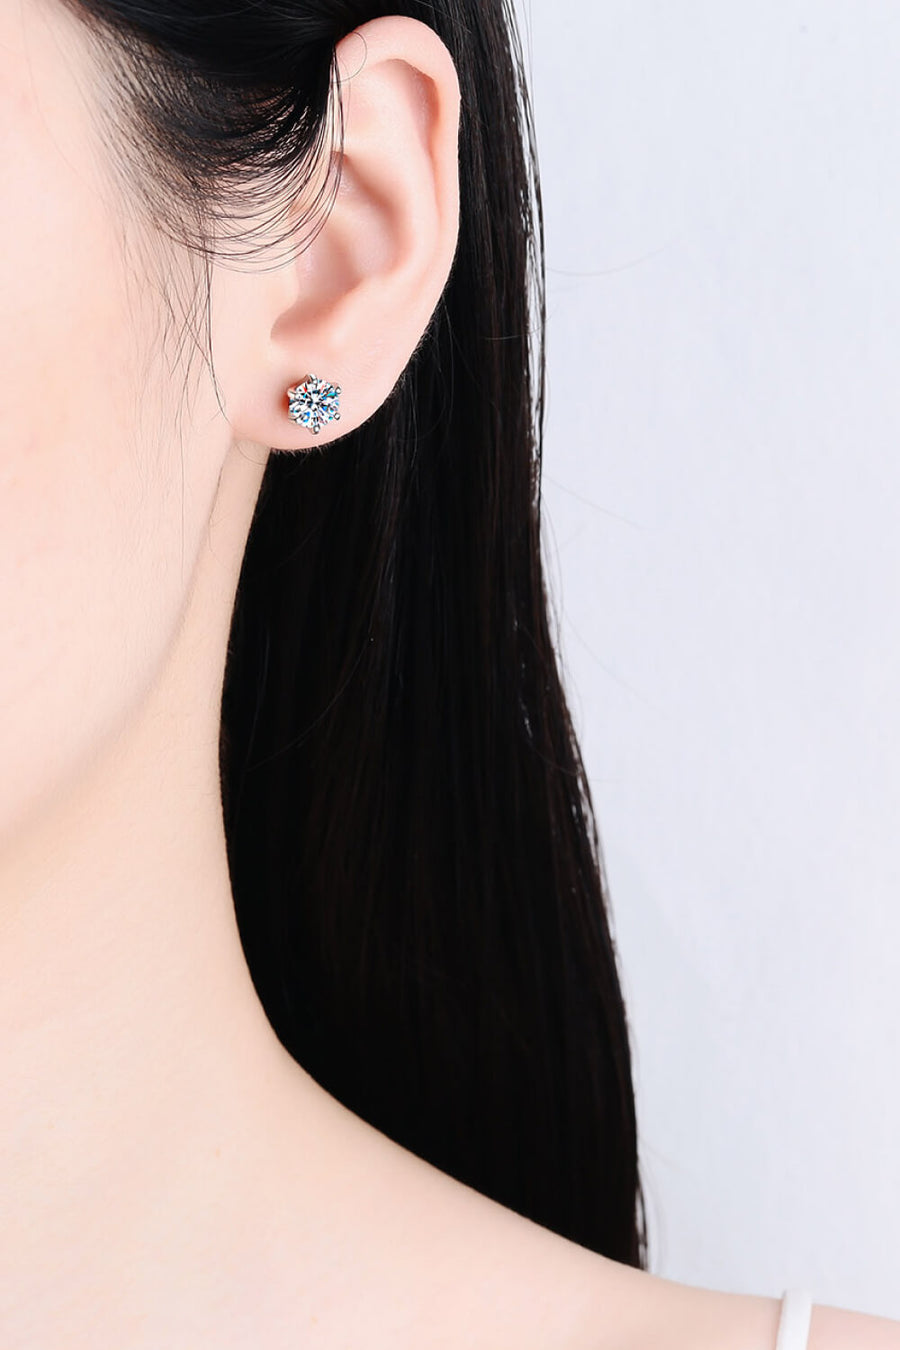 Best Diamond Earrings Jewelry Gifts for Women | 2 Carat Inlaid Round Diamond Stud Earrings | MASON New York